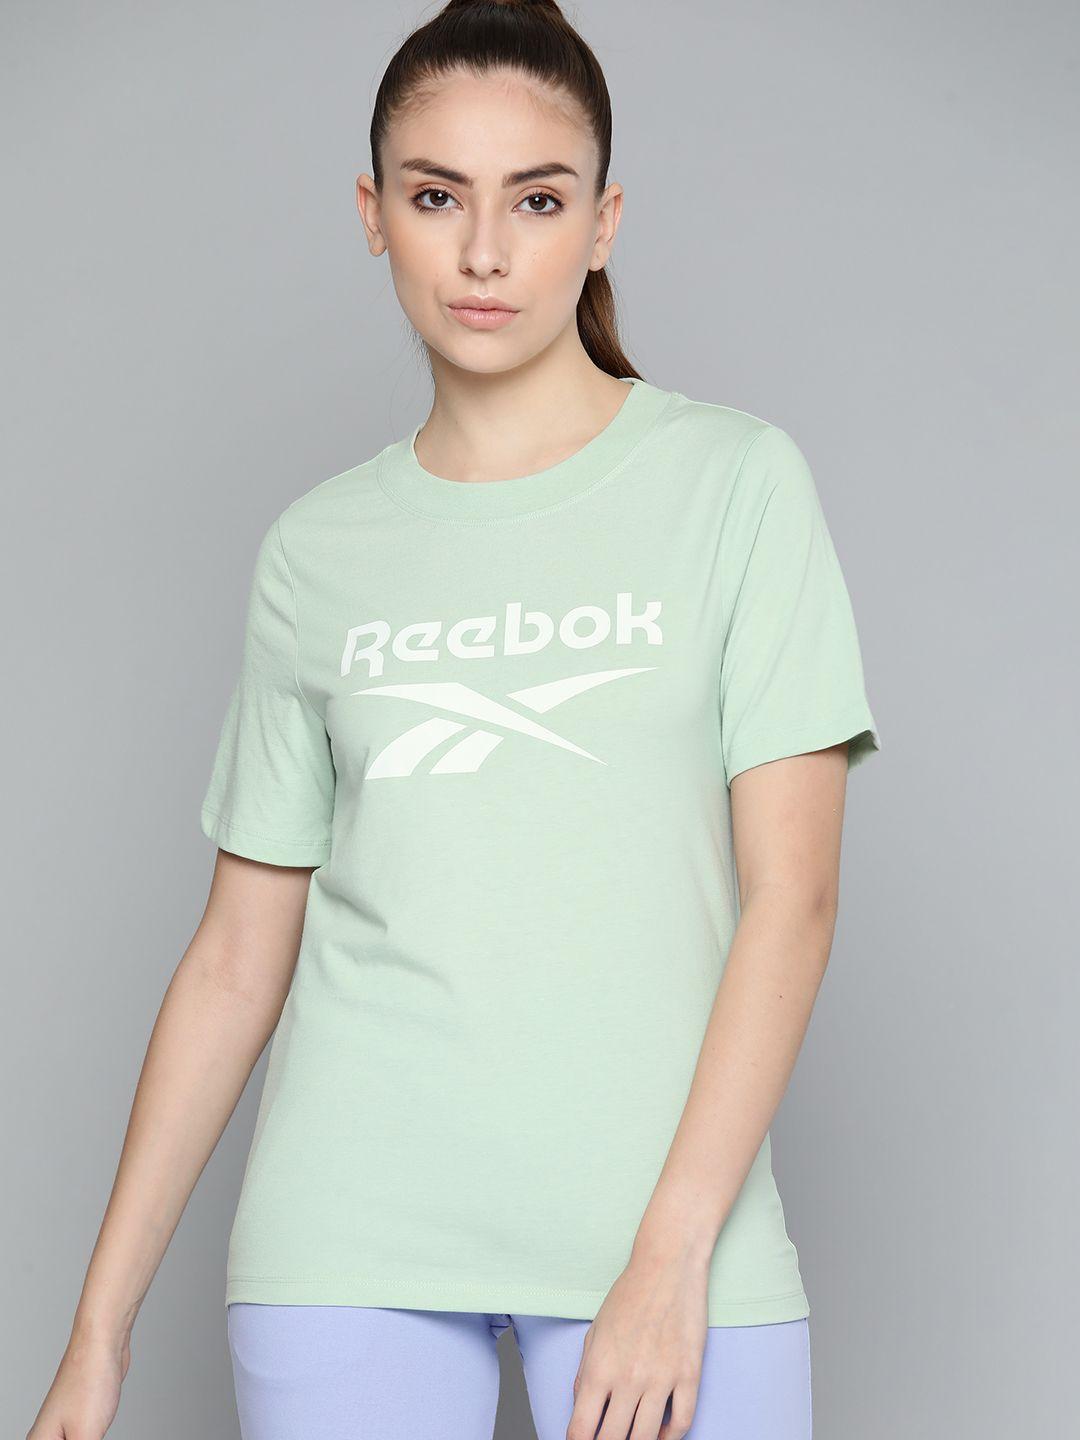 reebok women green & white brand logo printed pure cotton training or gym t-shirt